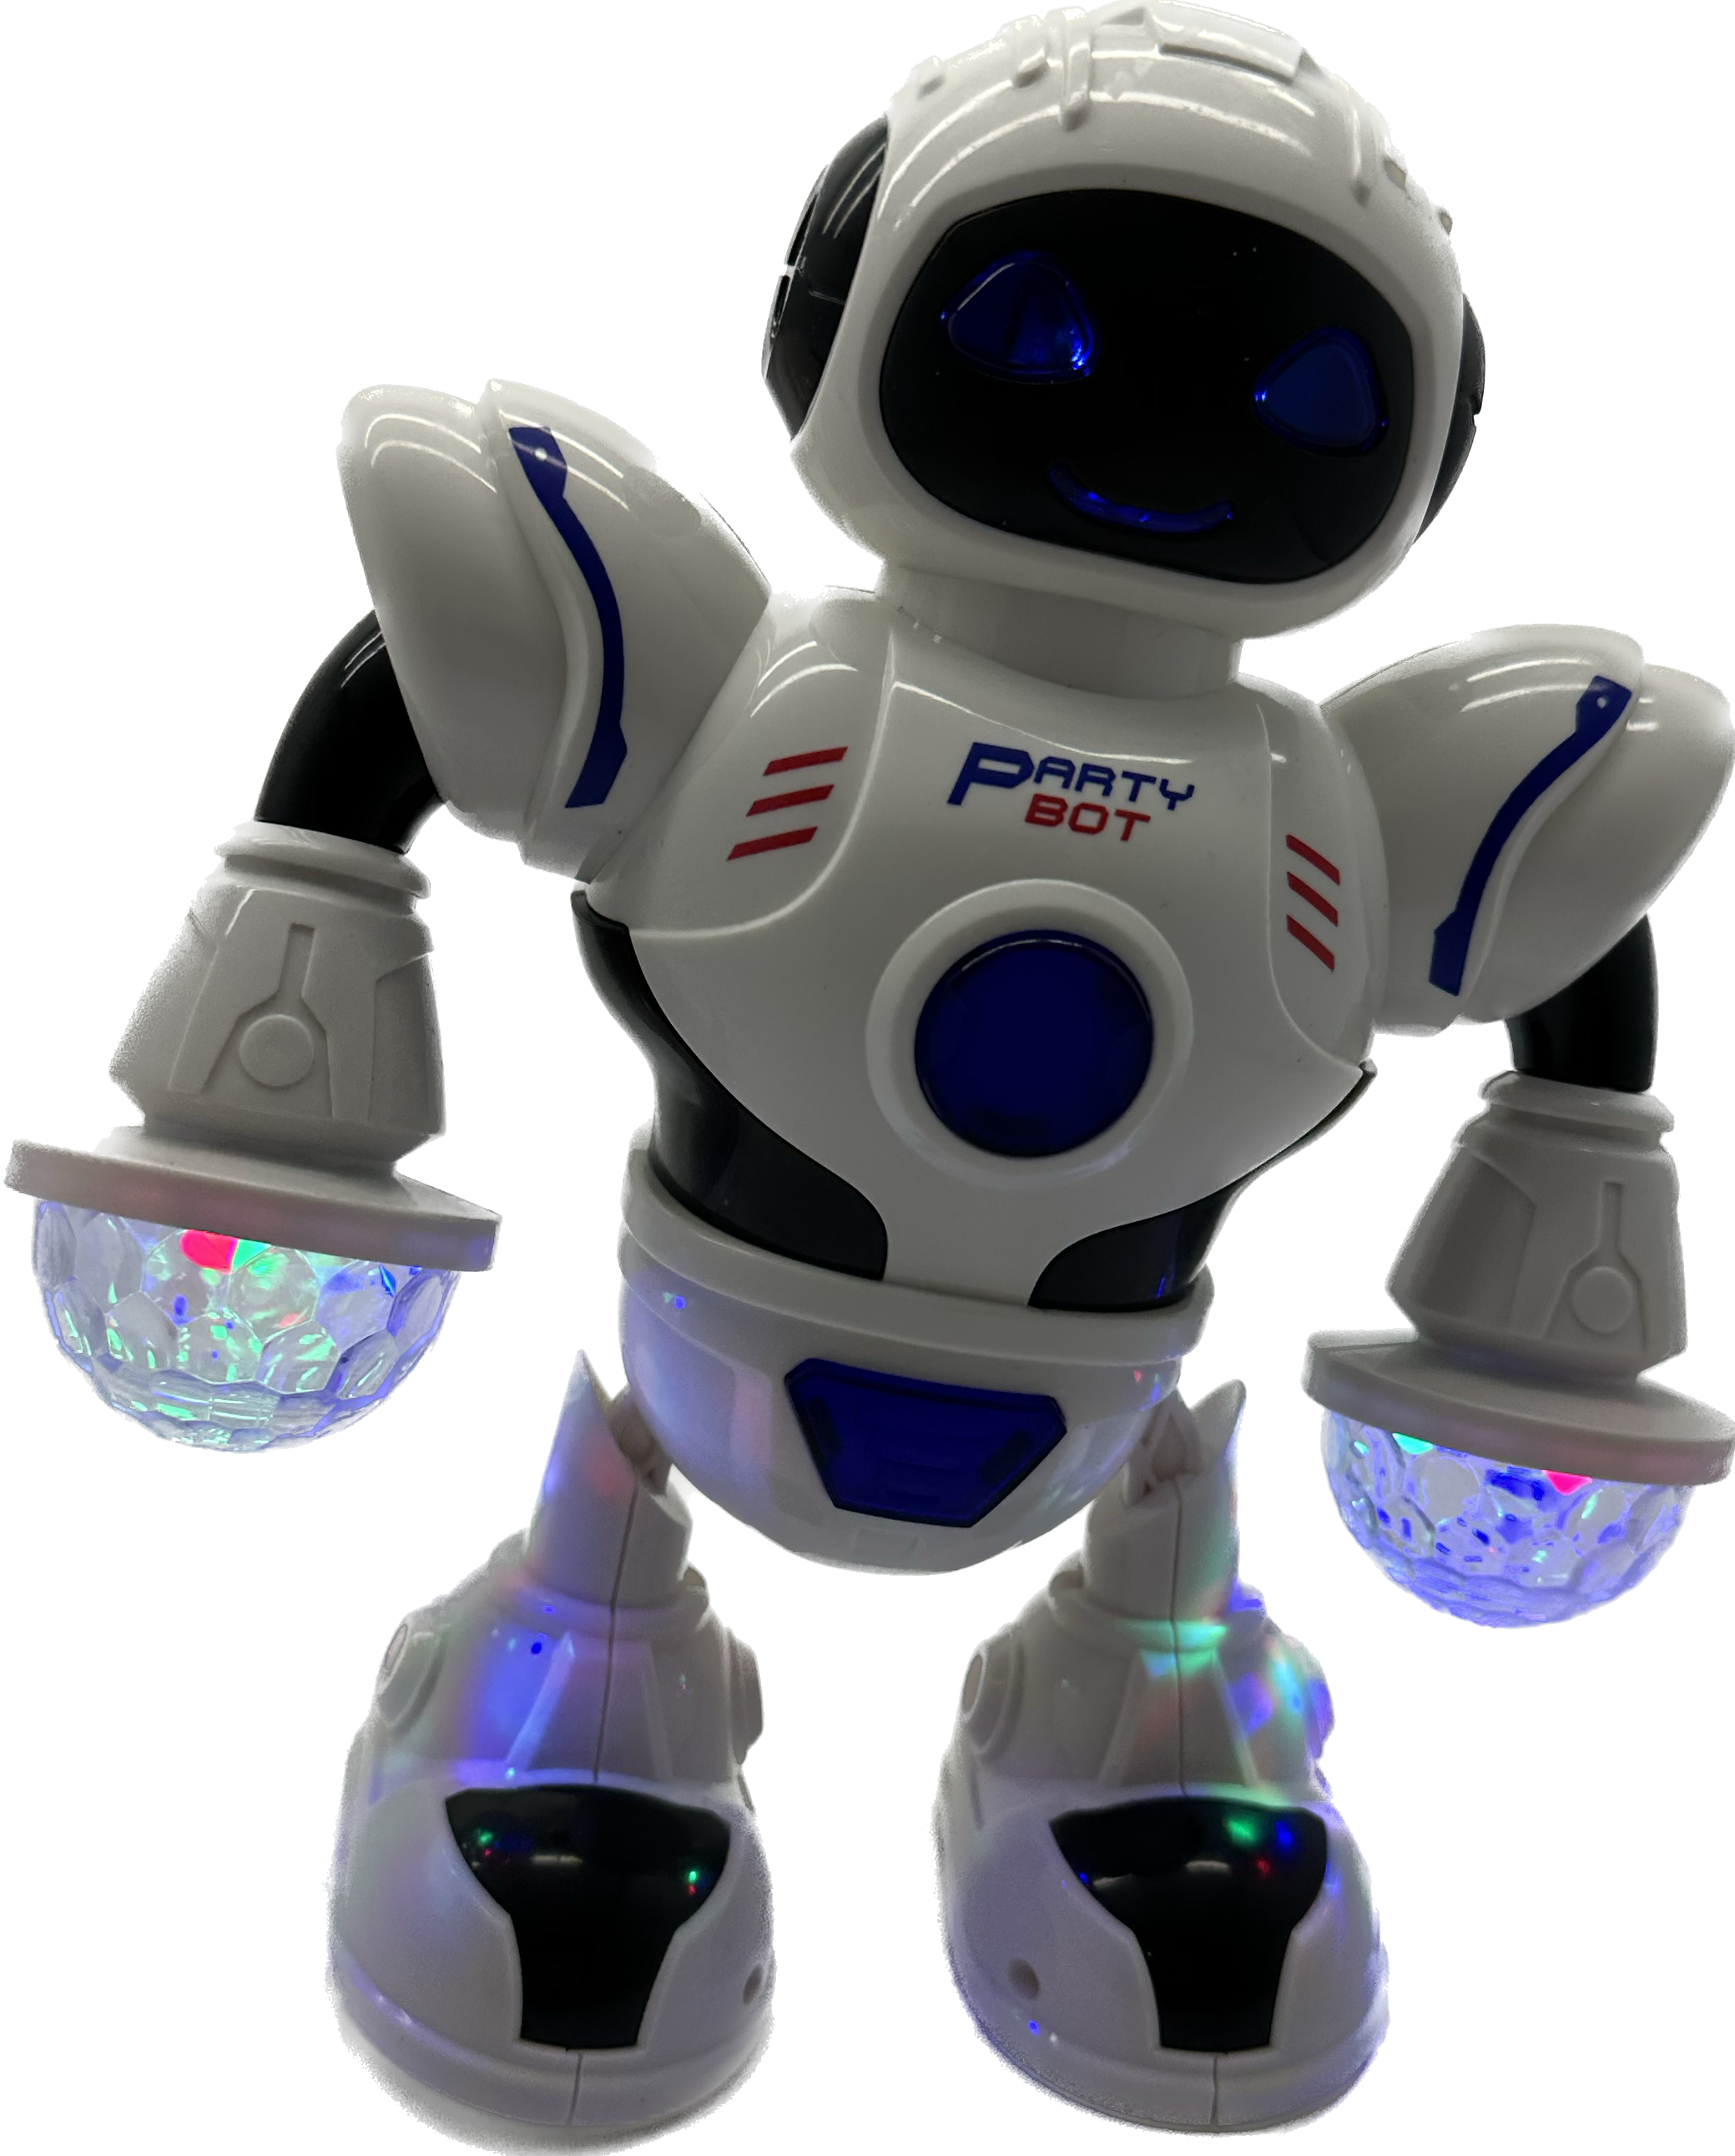 Party Bot Dansande robot